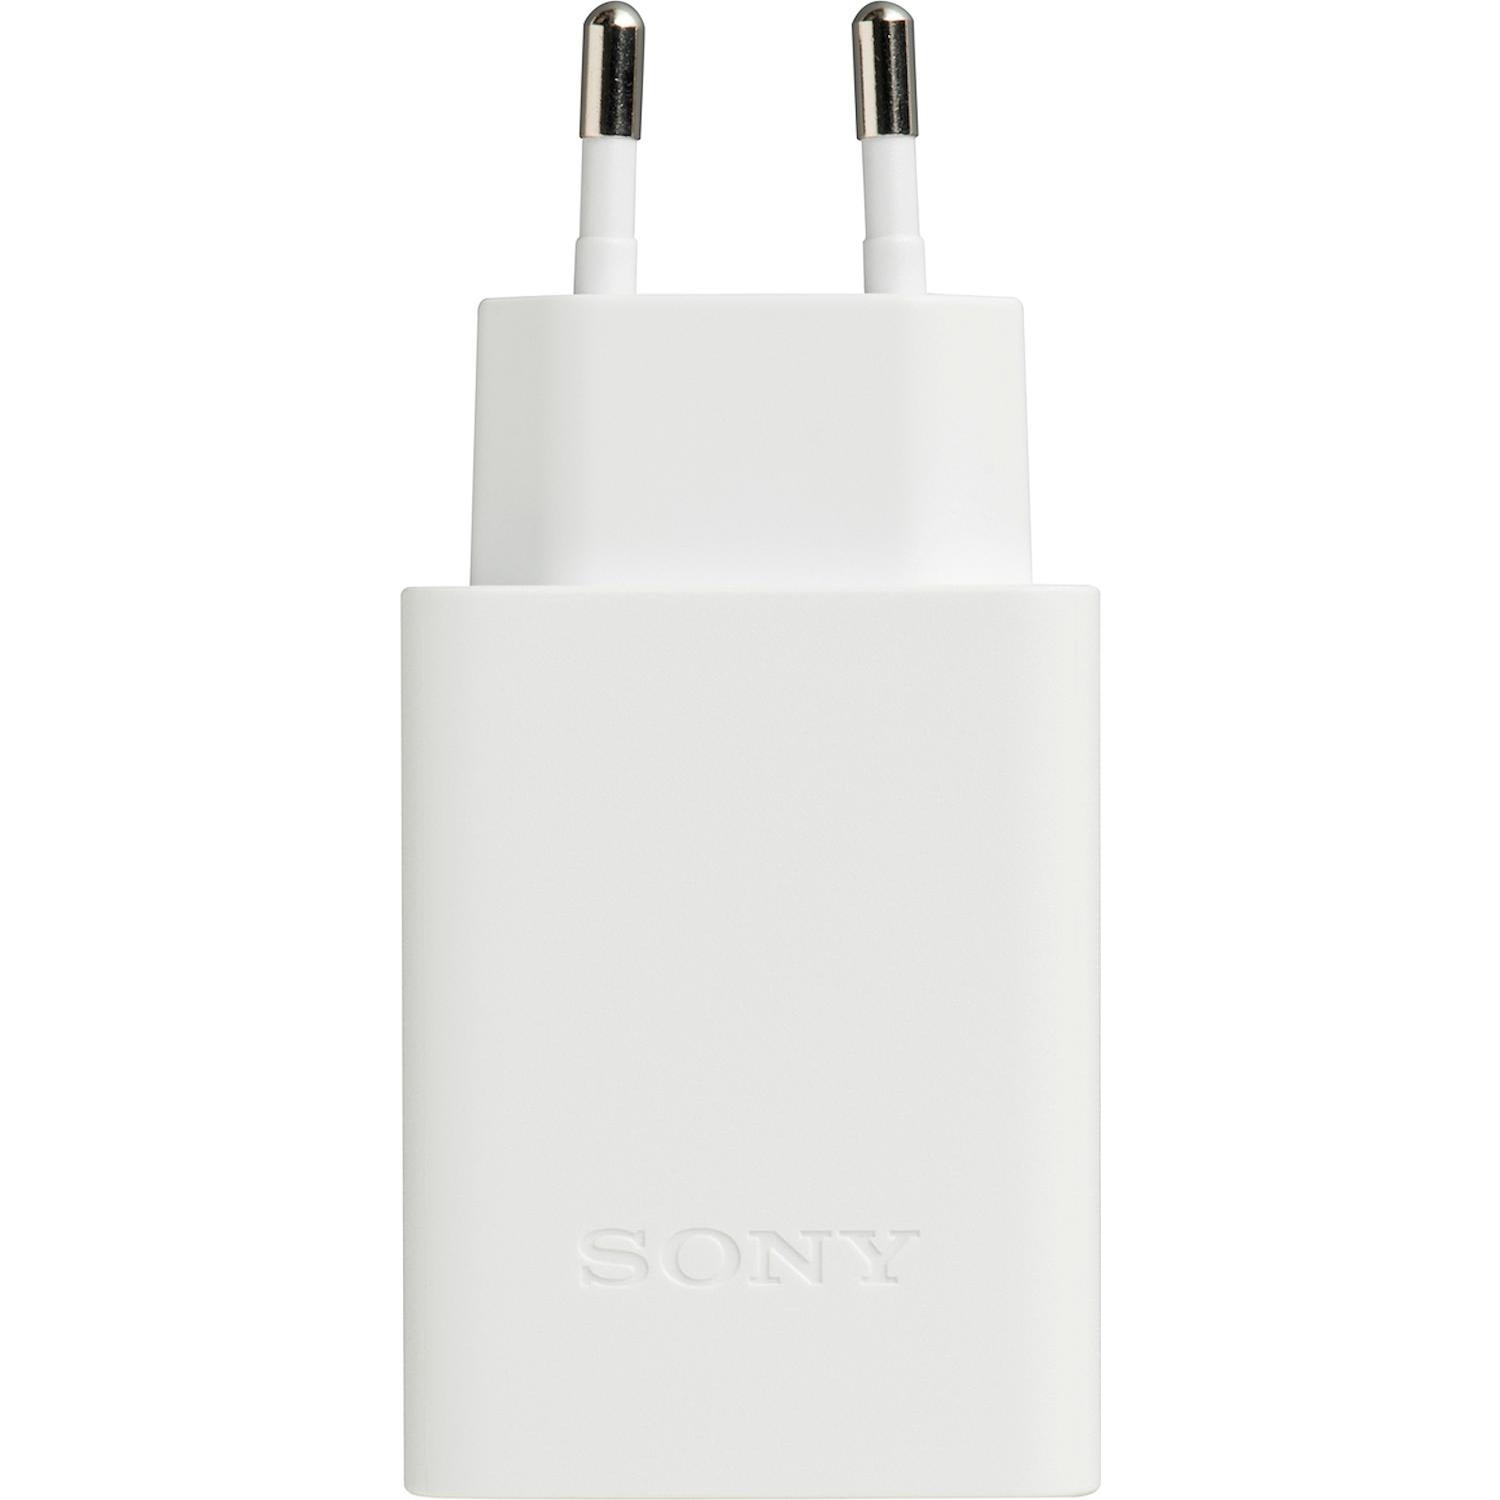 Immagine per Adattatore Sony Type C cavo 50 cm incluso (C-C) da DIMOStore